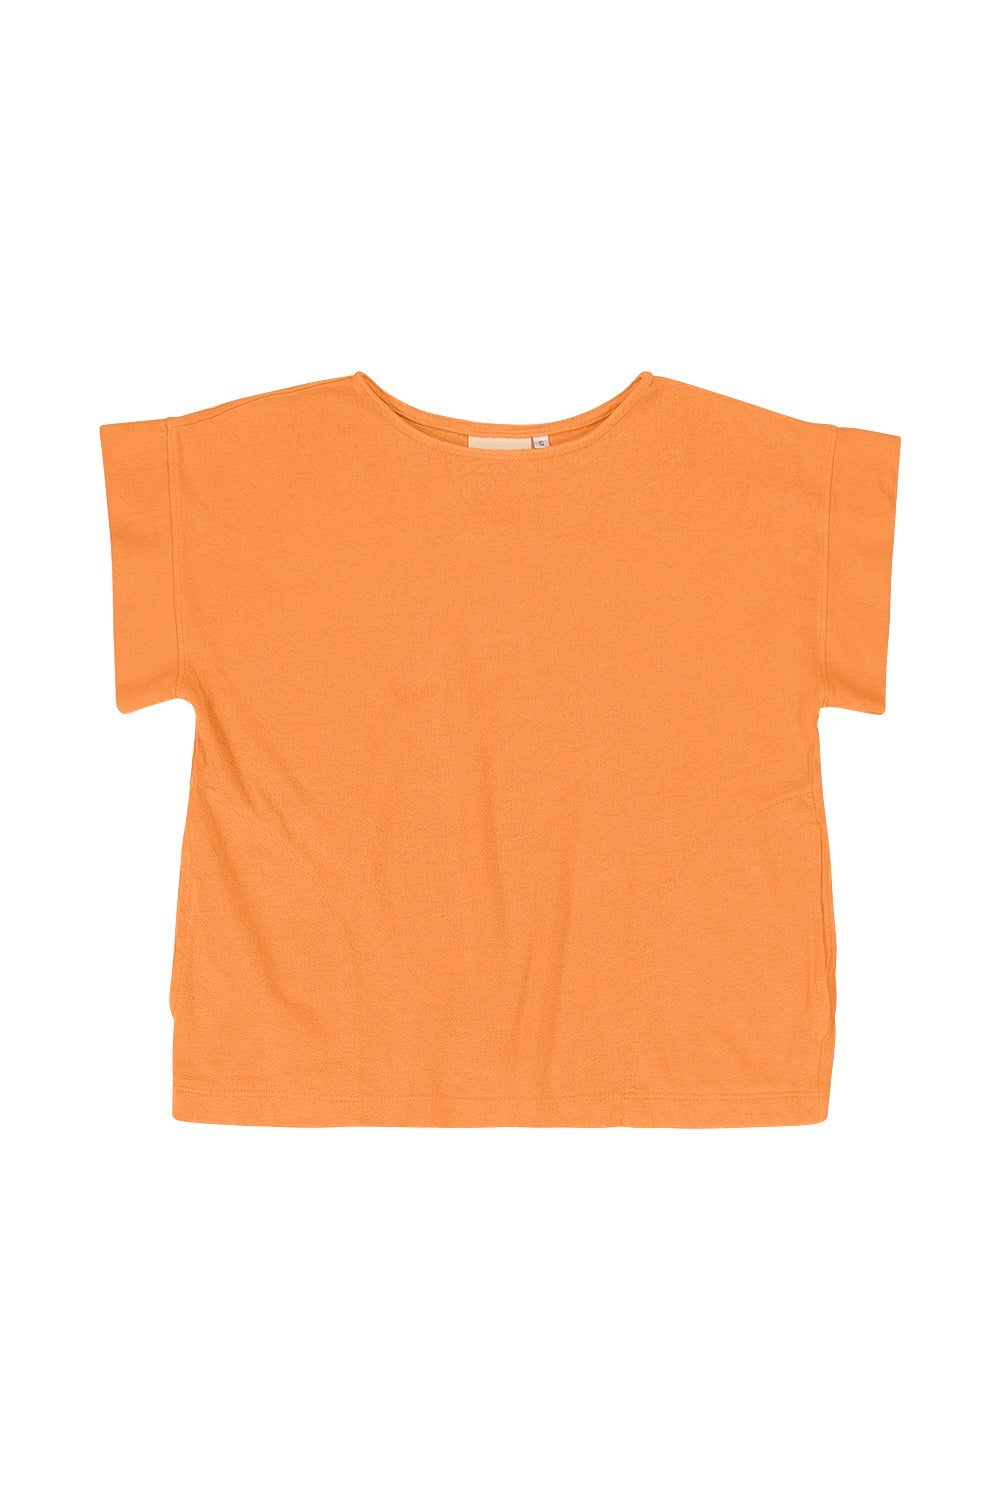 Taos Top | Jungmaven Hemp Clothing & Accessories / Color: Apricot Crush